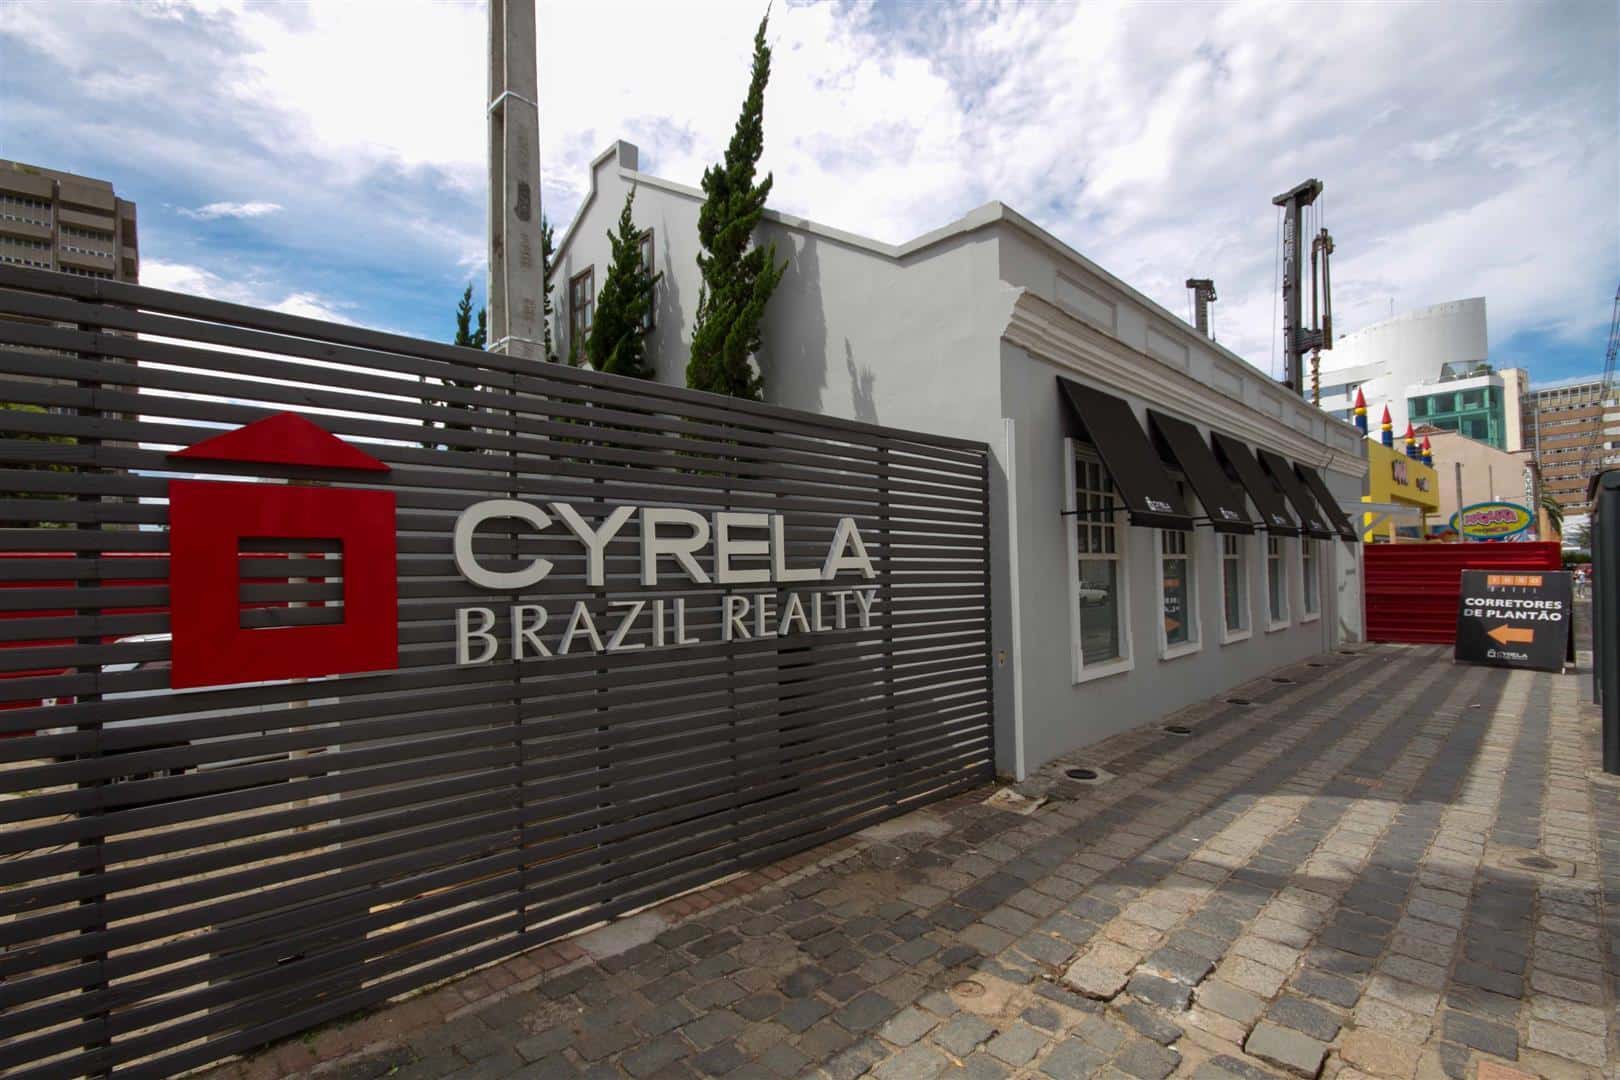 Cyrela Brazil Realty - CYRE3